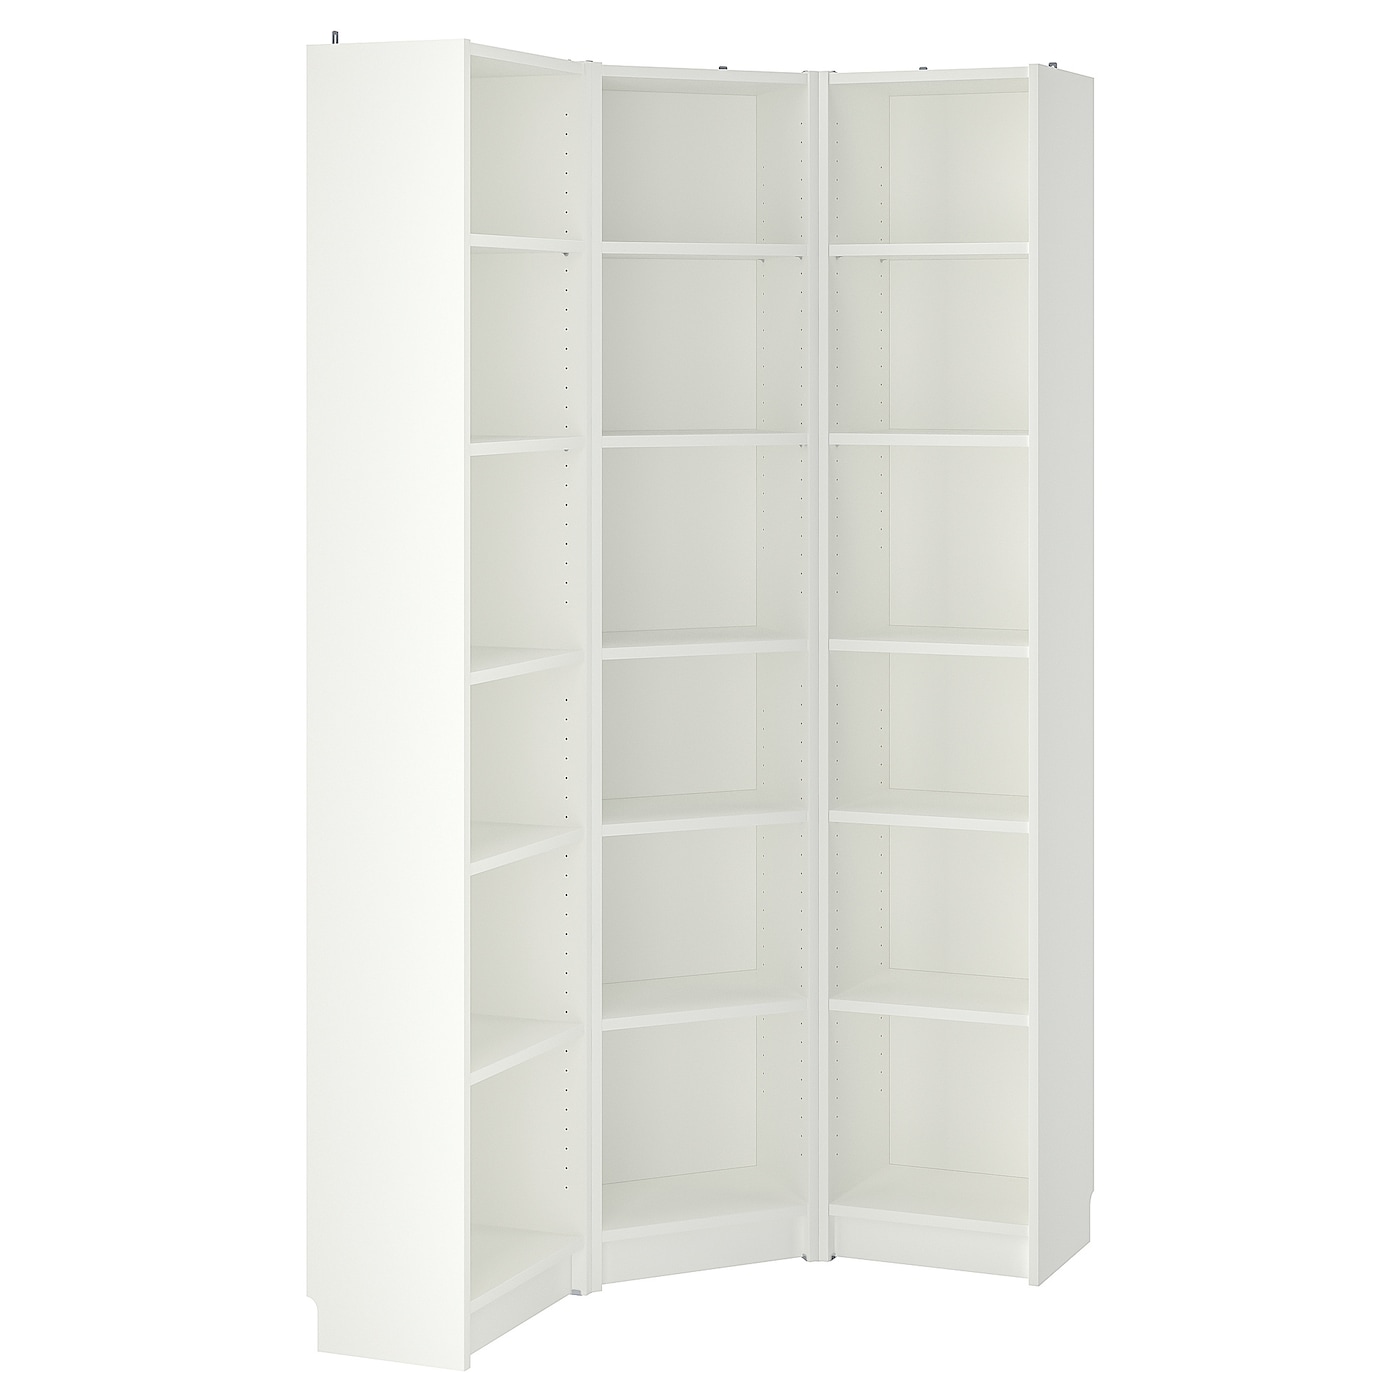 Угловой книжный шкаф - BILLY IKEA/БИЛЛИ ИКЕА, 28х95х202 см, белый